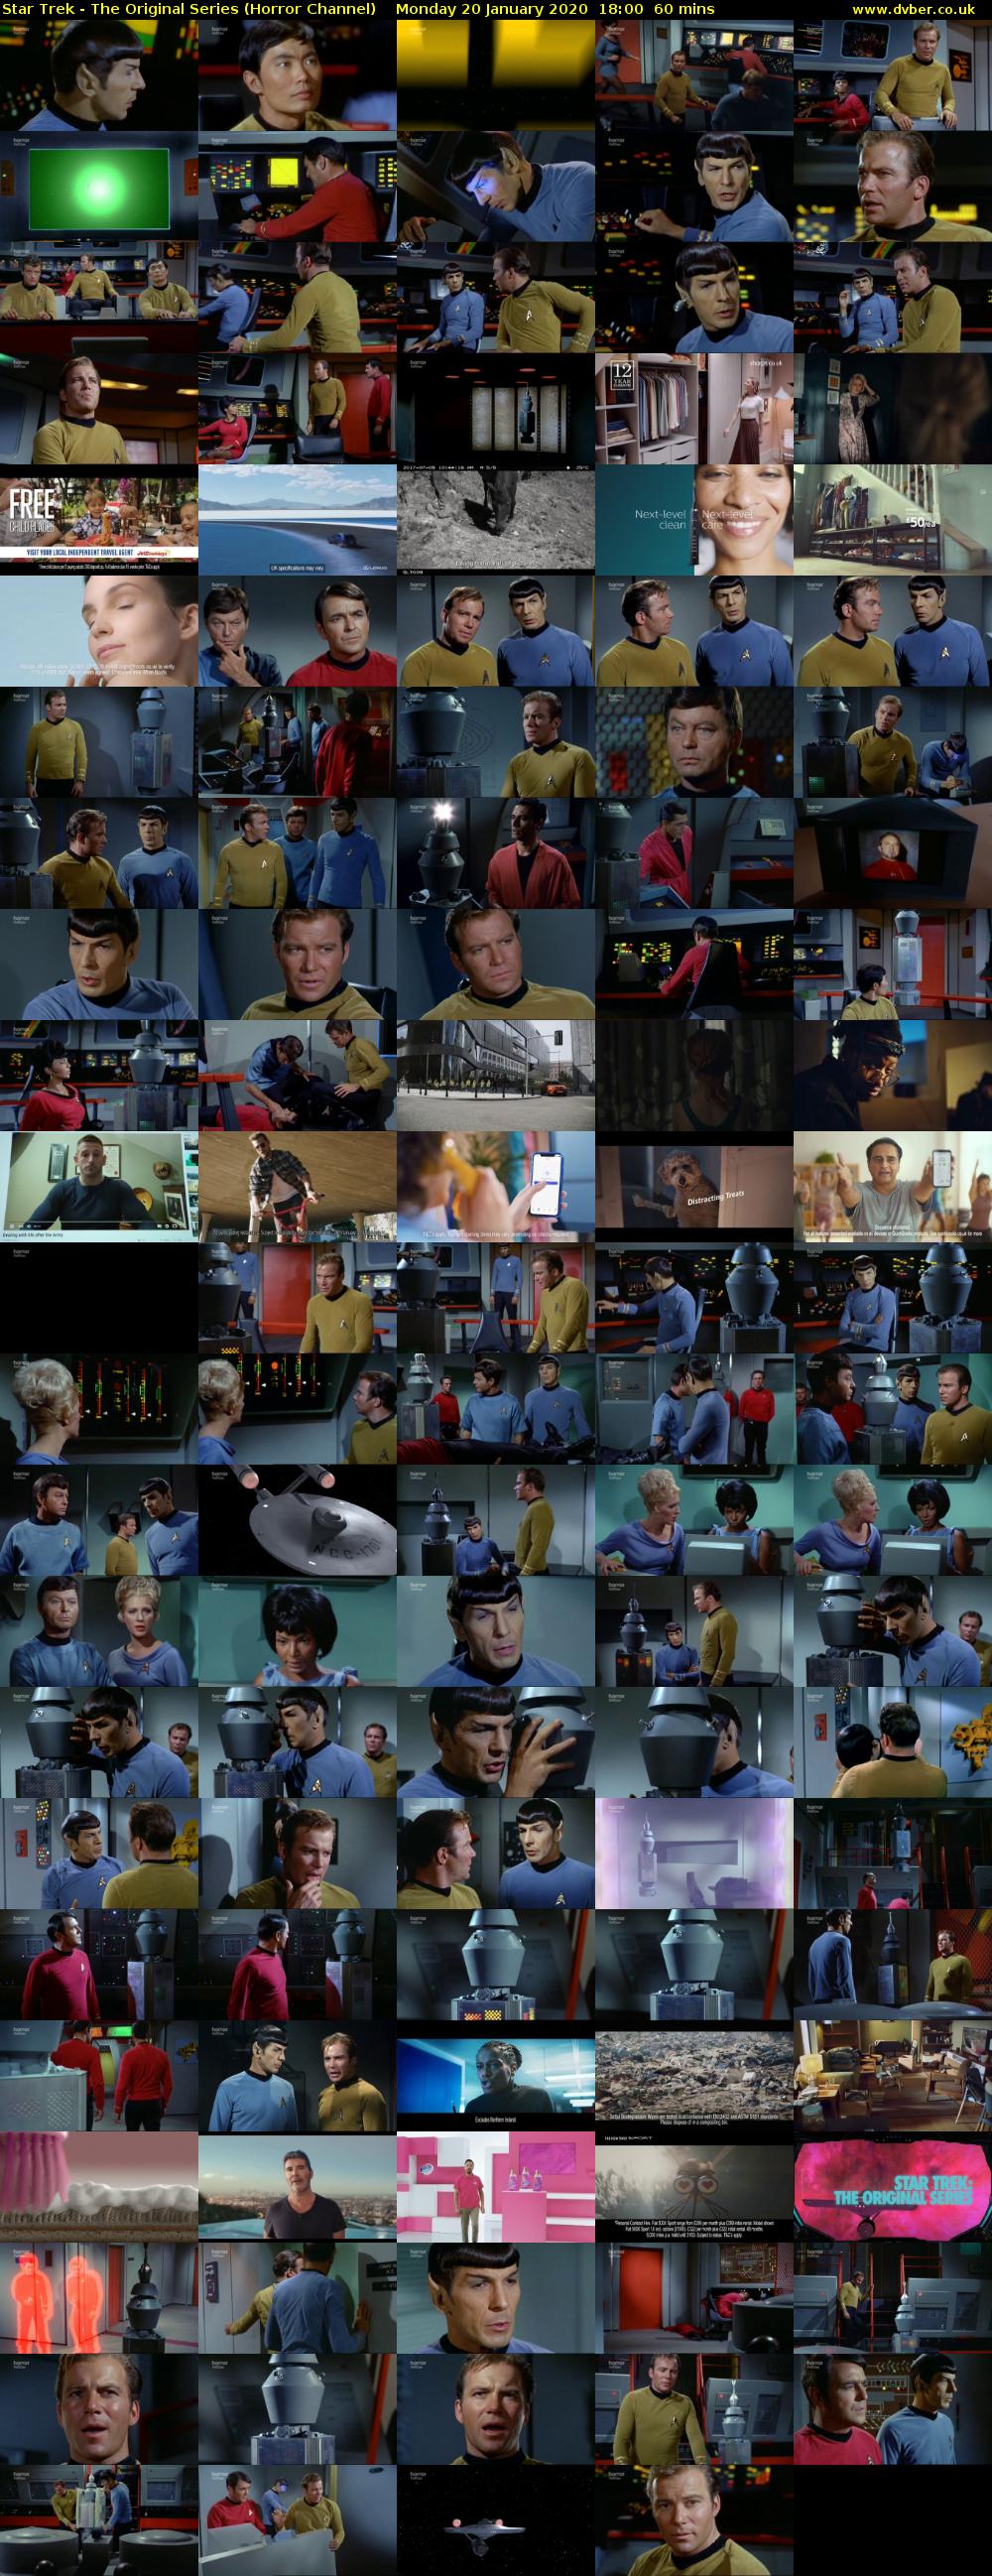 Star Trek - The Original Series (Horror Channel) Monday 20 January 2020 18:00 - 19:00